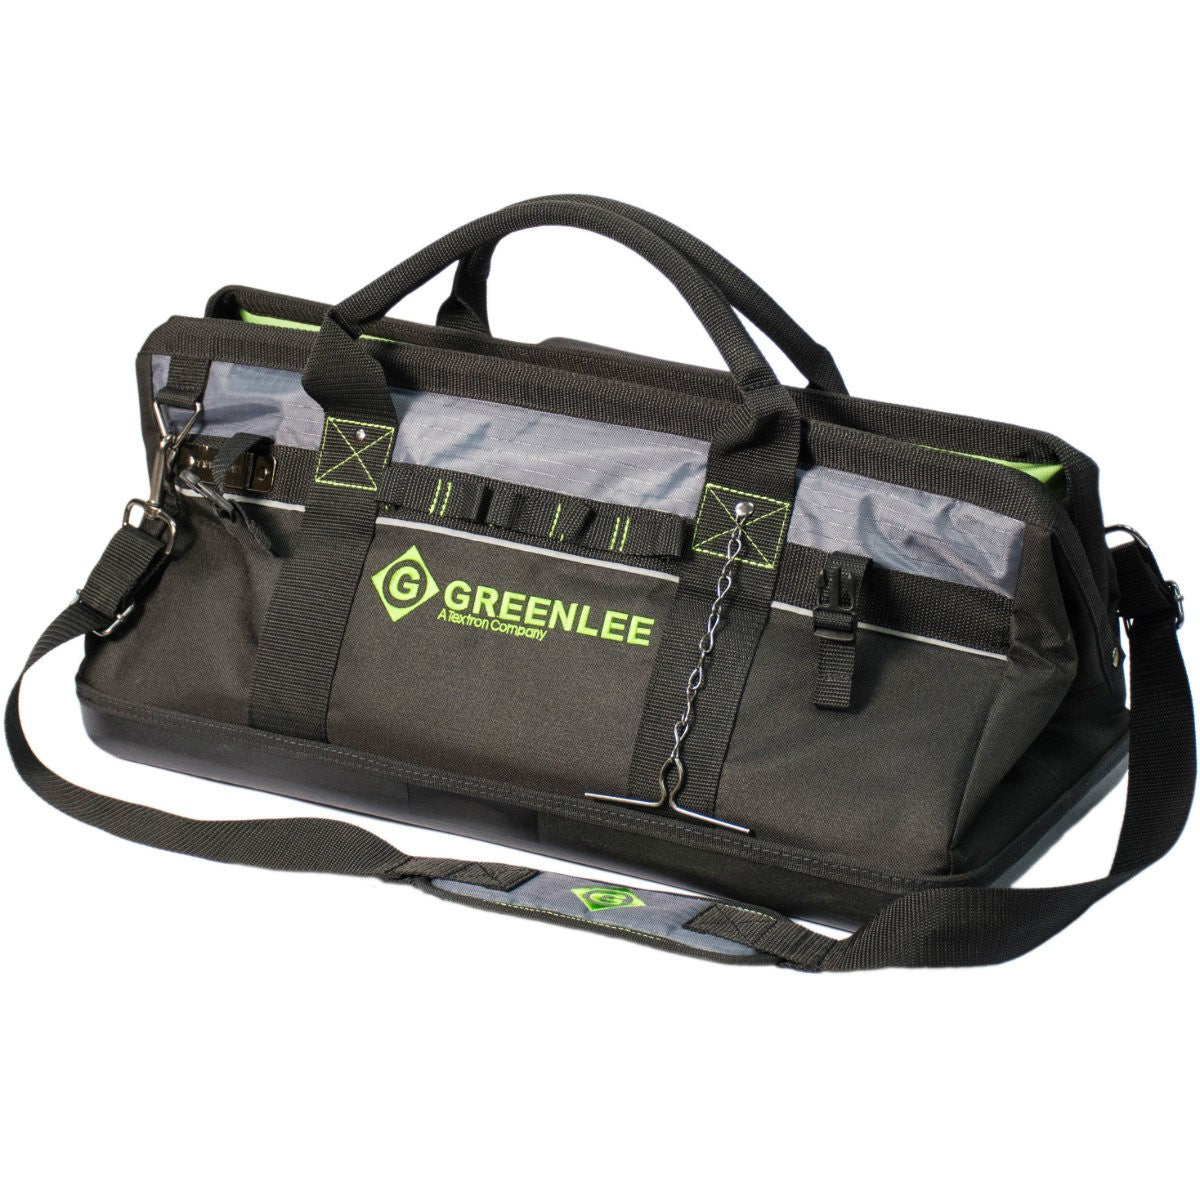 Greenlee 0158-21 20" Multi-Pocket Heavy-Duty Tool Bag